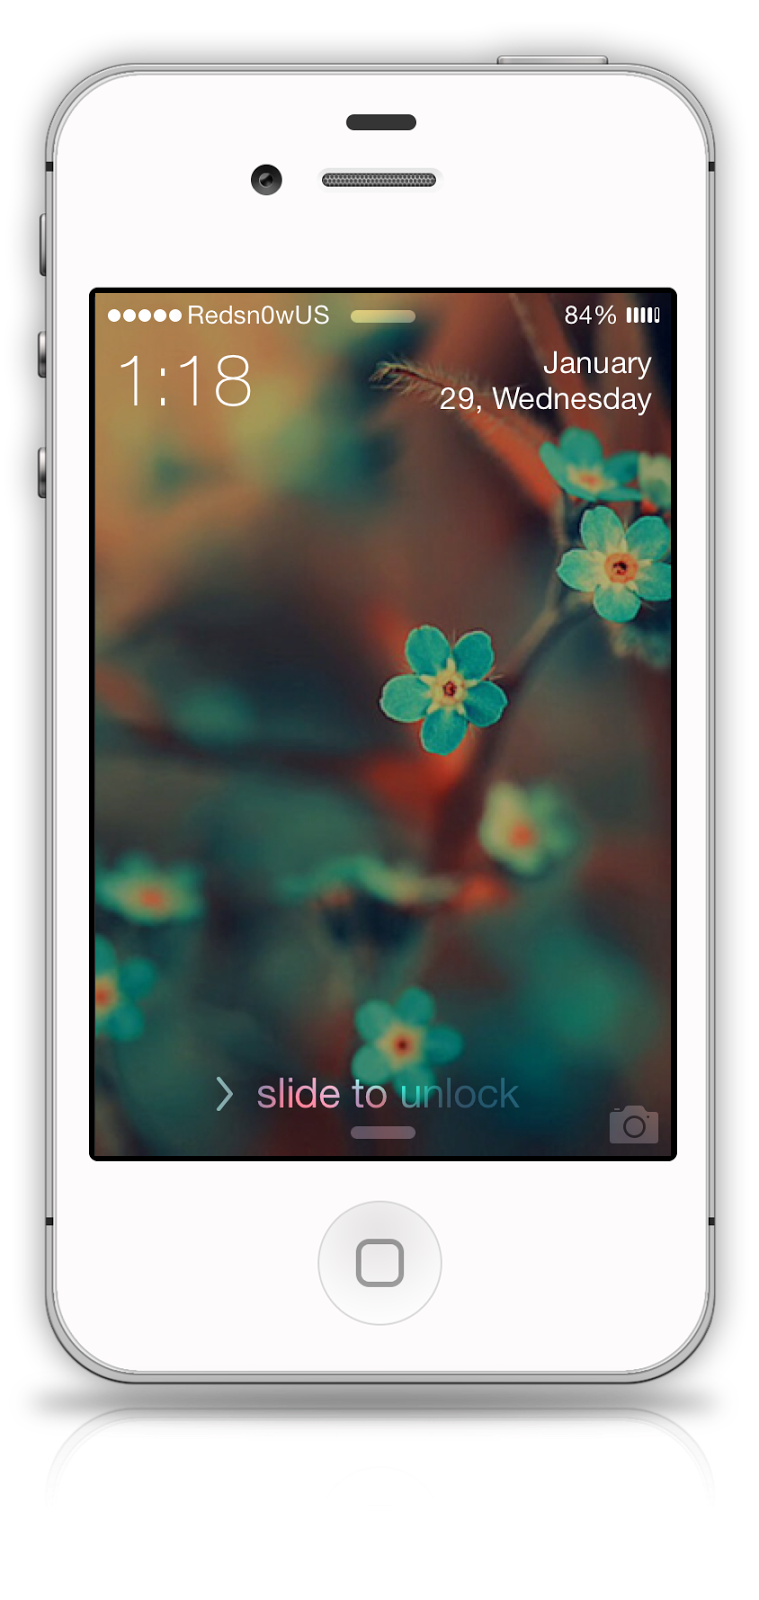 SubtleLock (iOS 7): Simplify The Look Of The Lock Screen On iOS 7